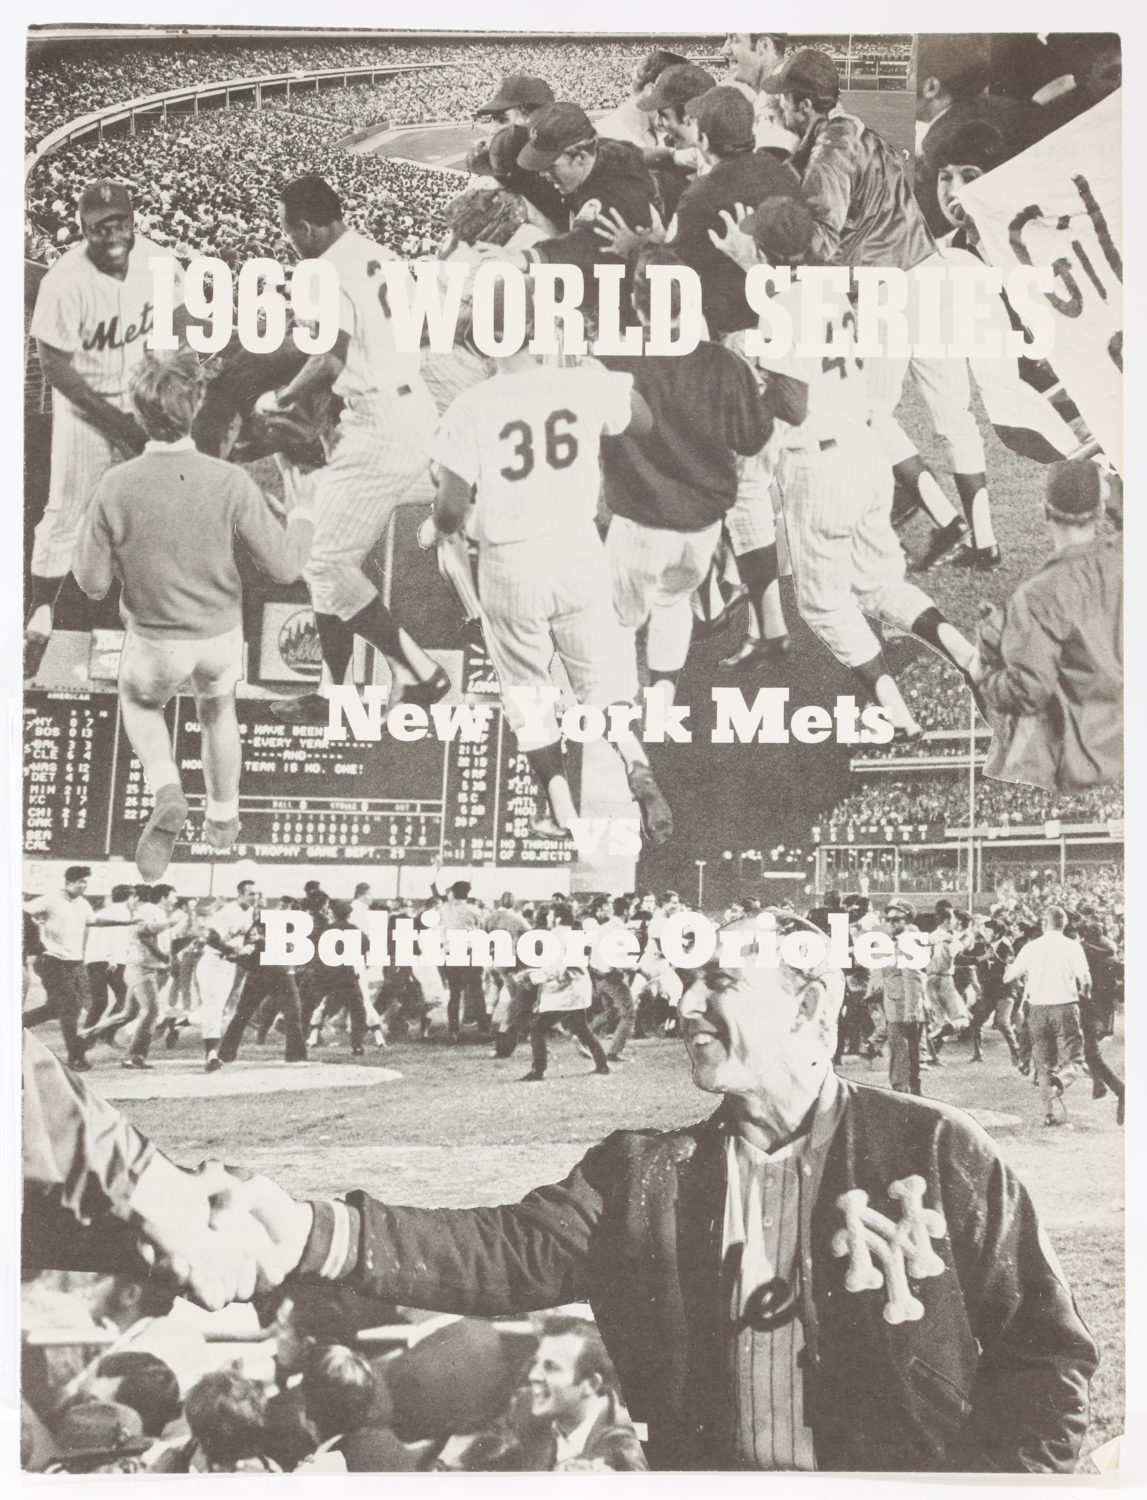 1969 World Series Game 5 Scorecard